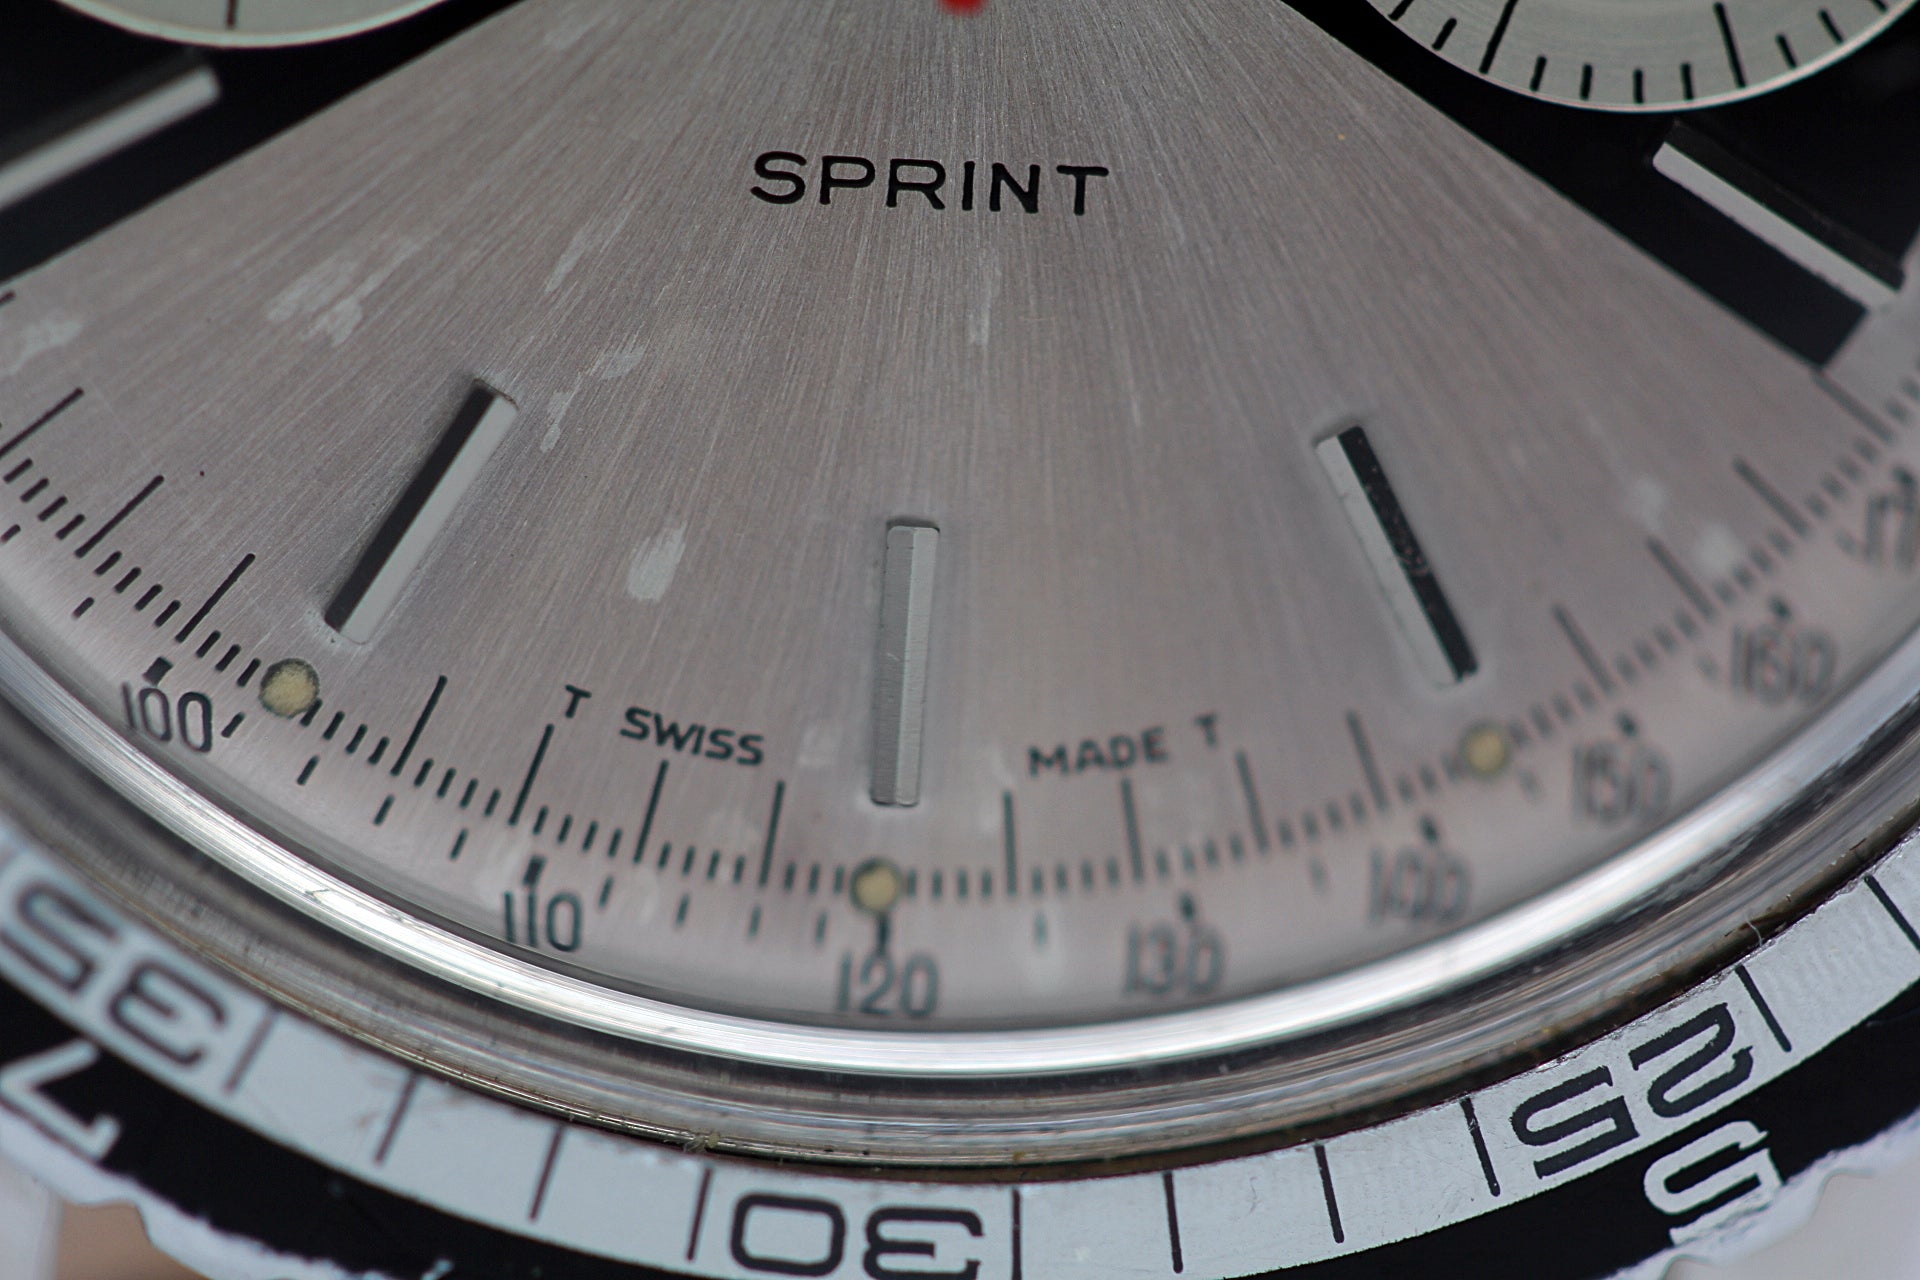 BREITLING<br> Sprint Chronograph Ref.2010 